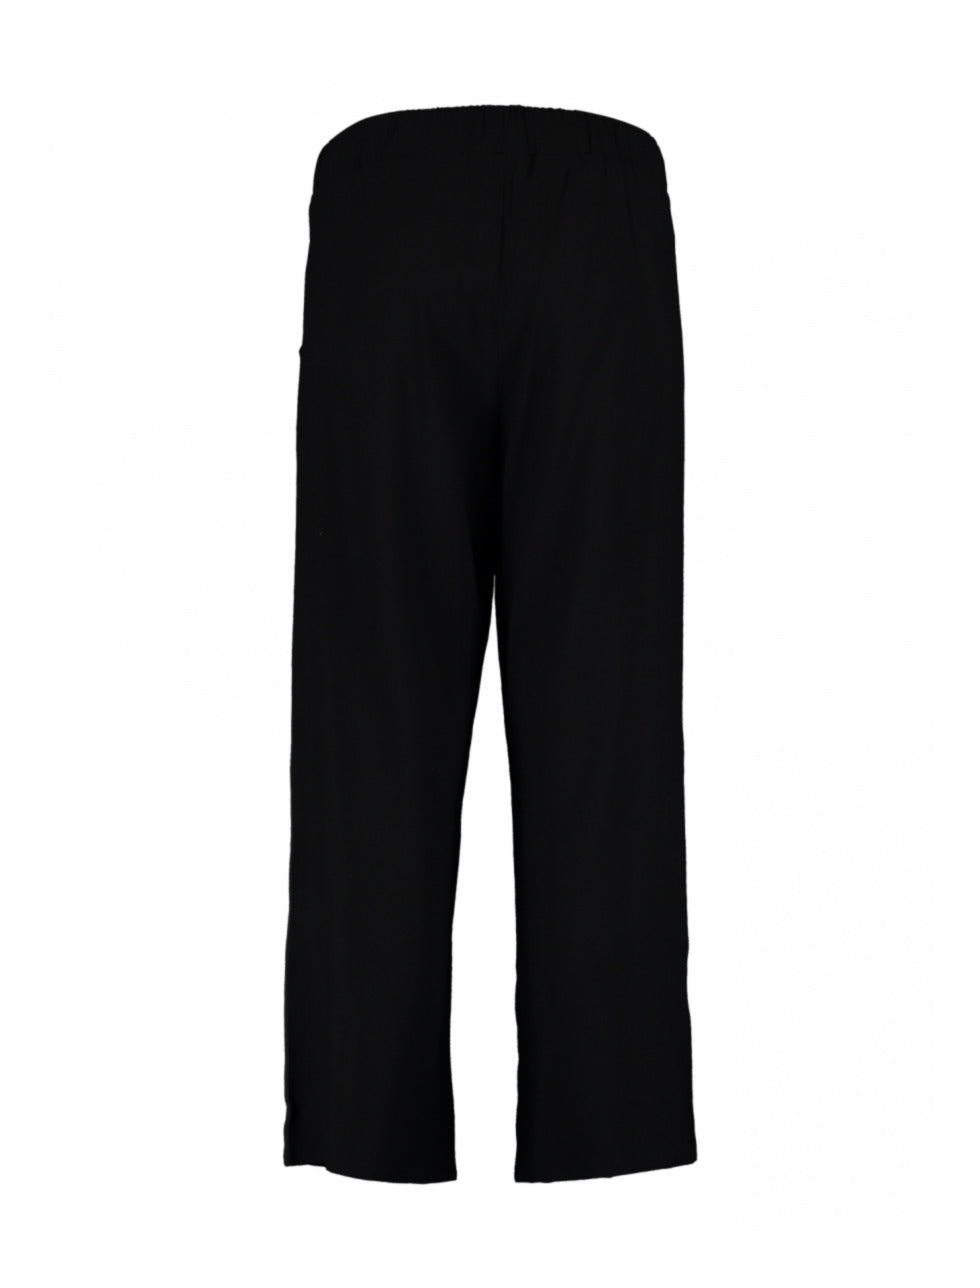 Cira Black Cropped Trousers